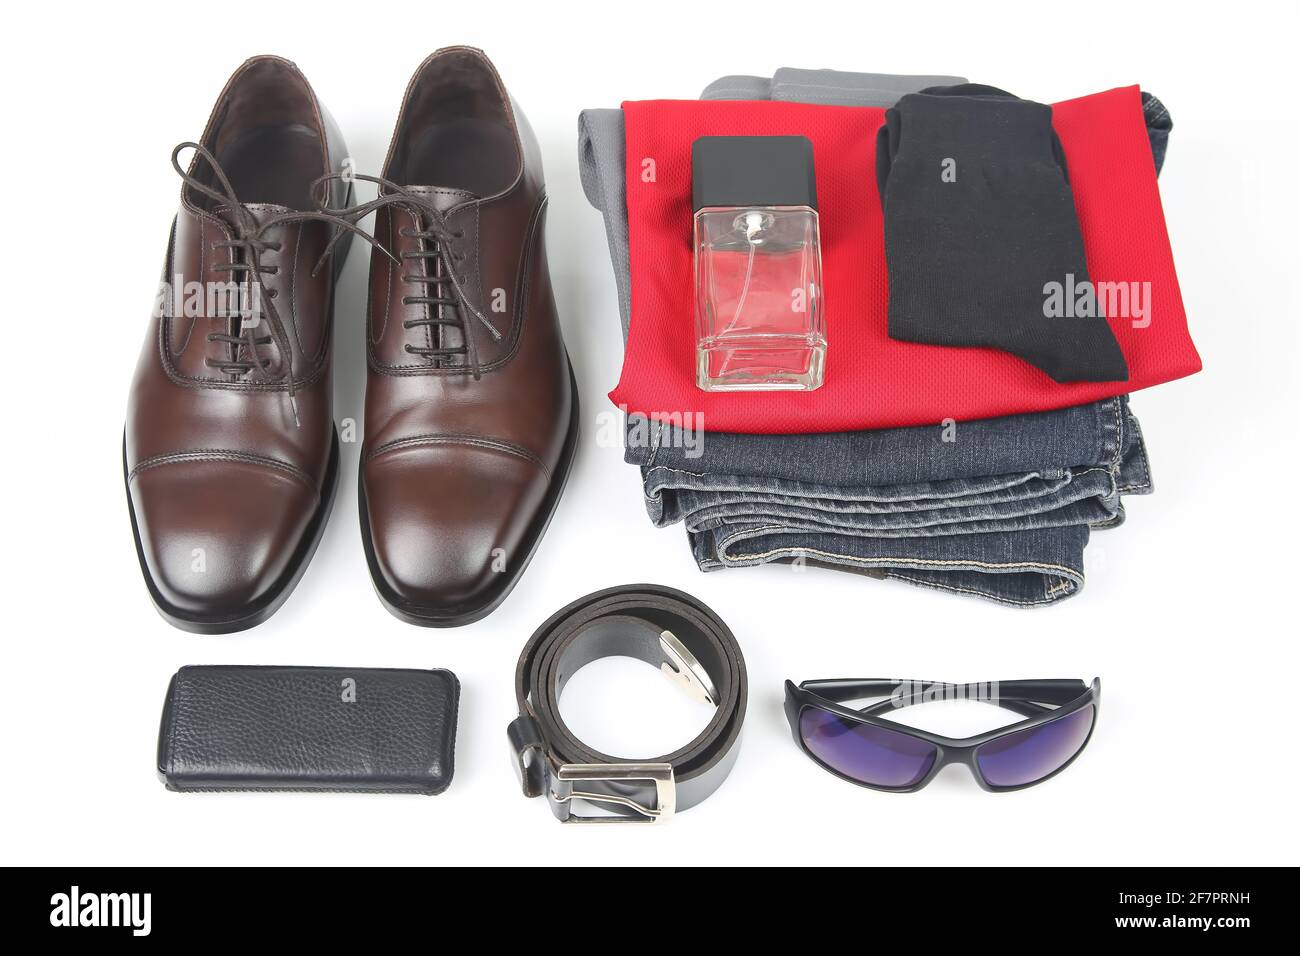 Classic men's shoes, belt, glasses, eau de toilette, clothes and mobile phone on white background Stock Photo